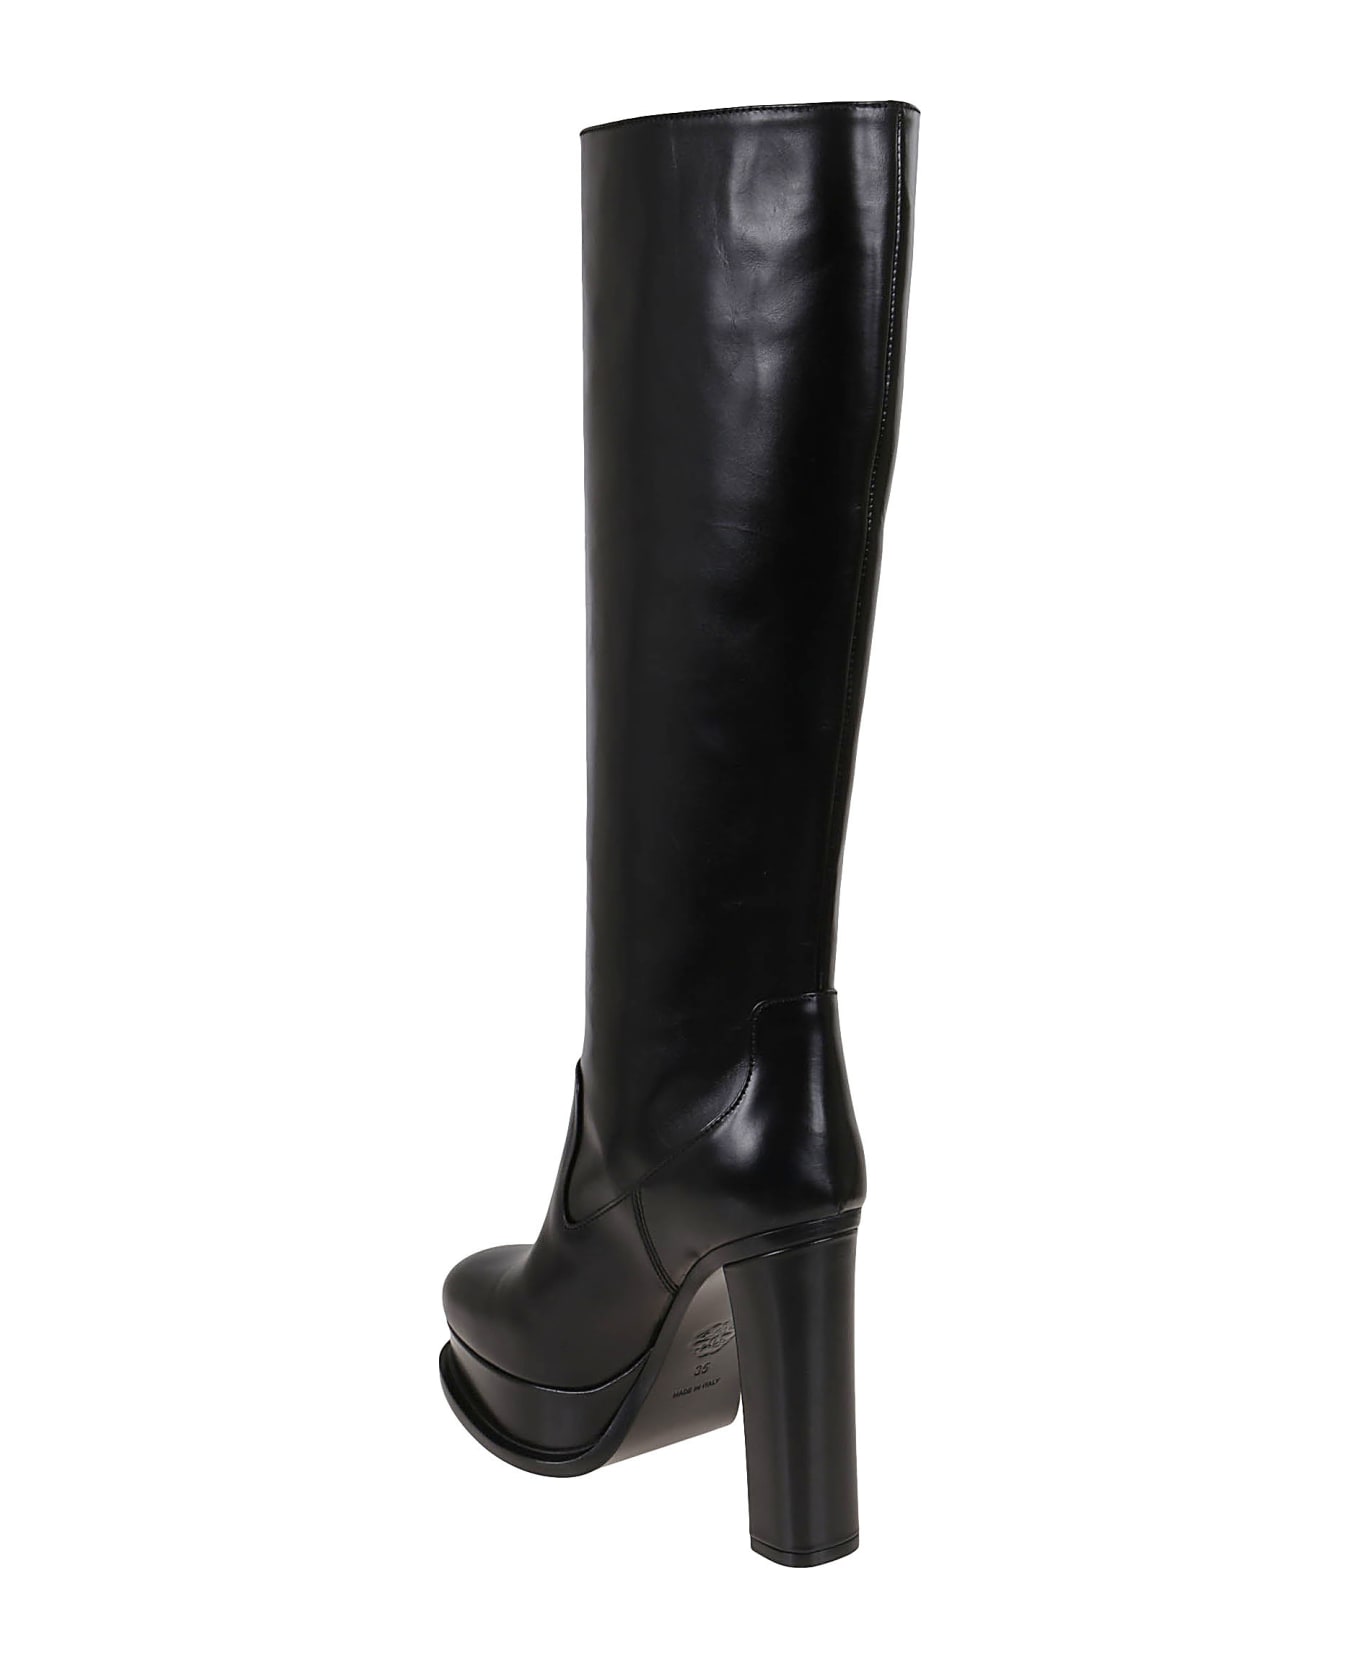 Alexander McQueen Boots Leather - Black